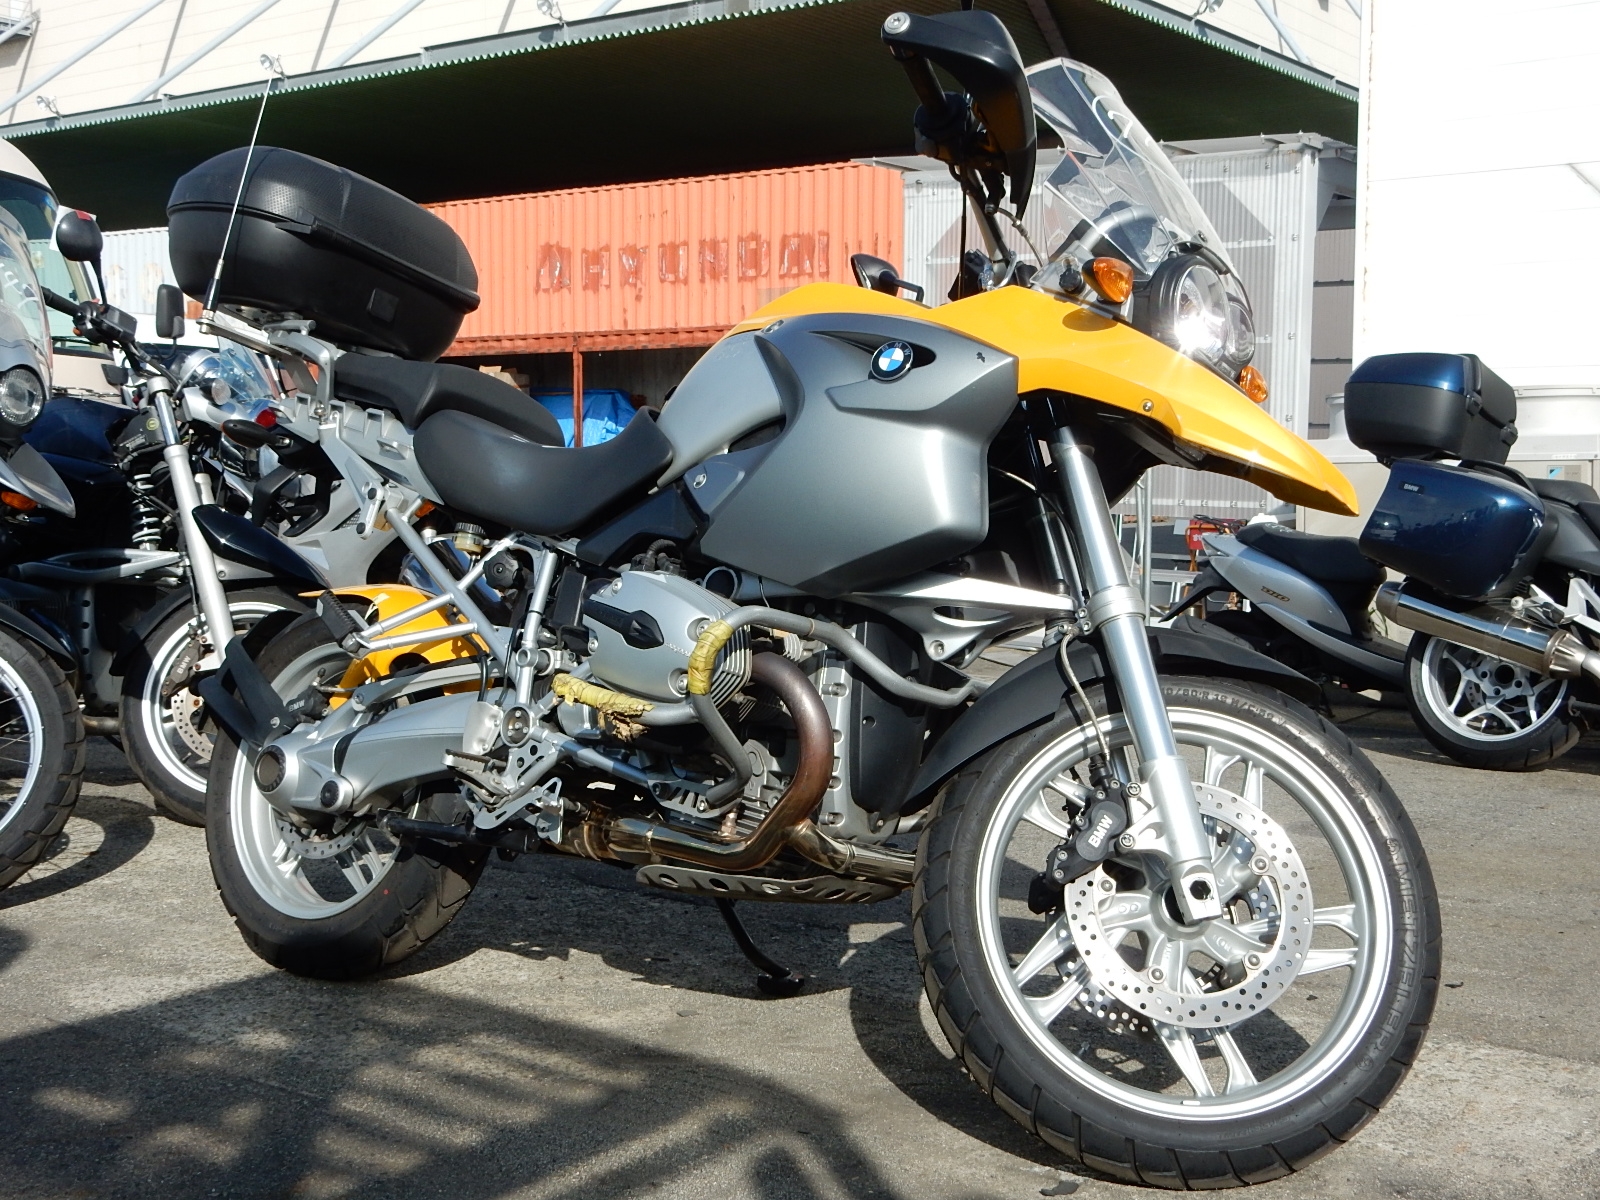 BMW GS 400. 1. R 1200 GS мотоцикла. Yamaha TDM И BMW gs1200. Мотоциклы БМВ бу. Мотоцикл ру бу